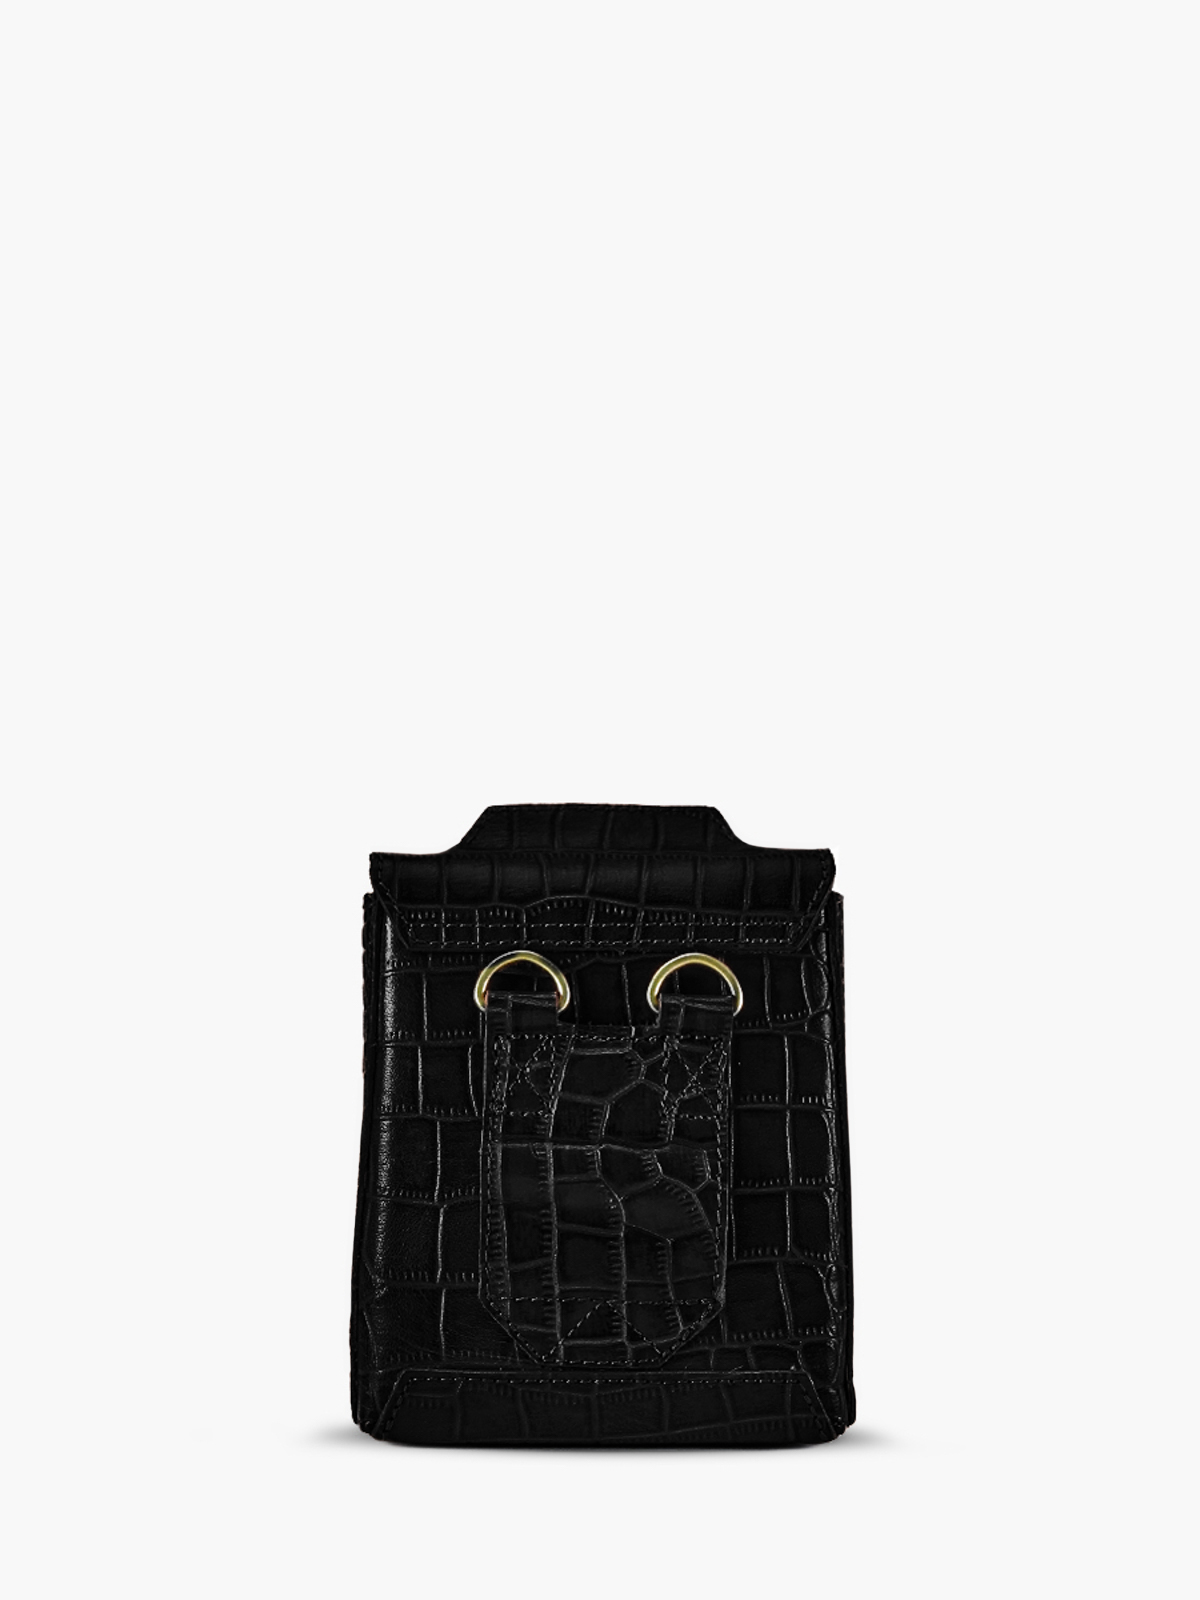 leather-phone-bag-for-woman-black-rear-view-picture-agathe-alligator-jet-black-paul-marius-3760125357454